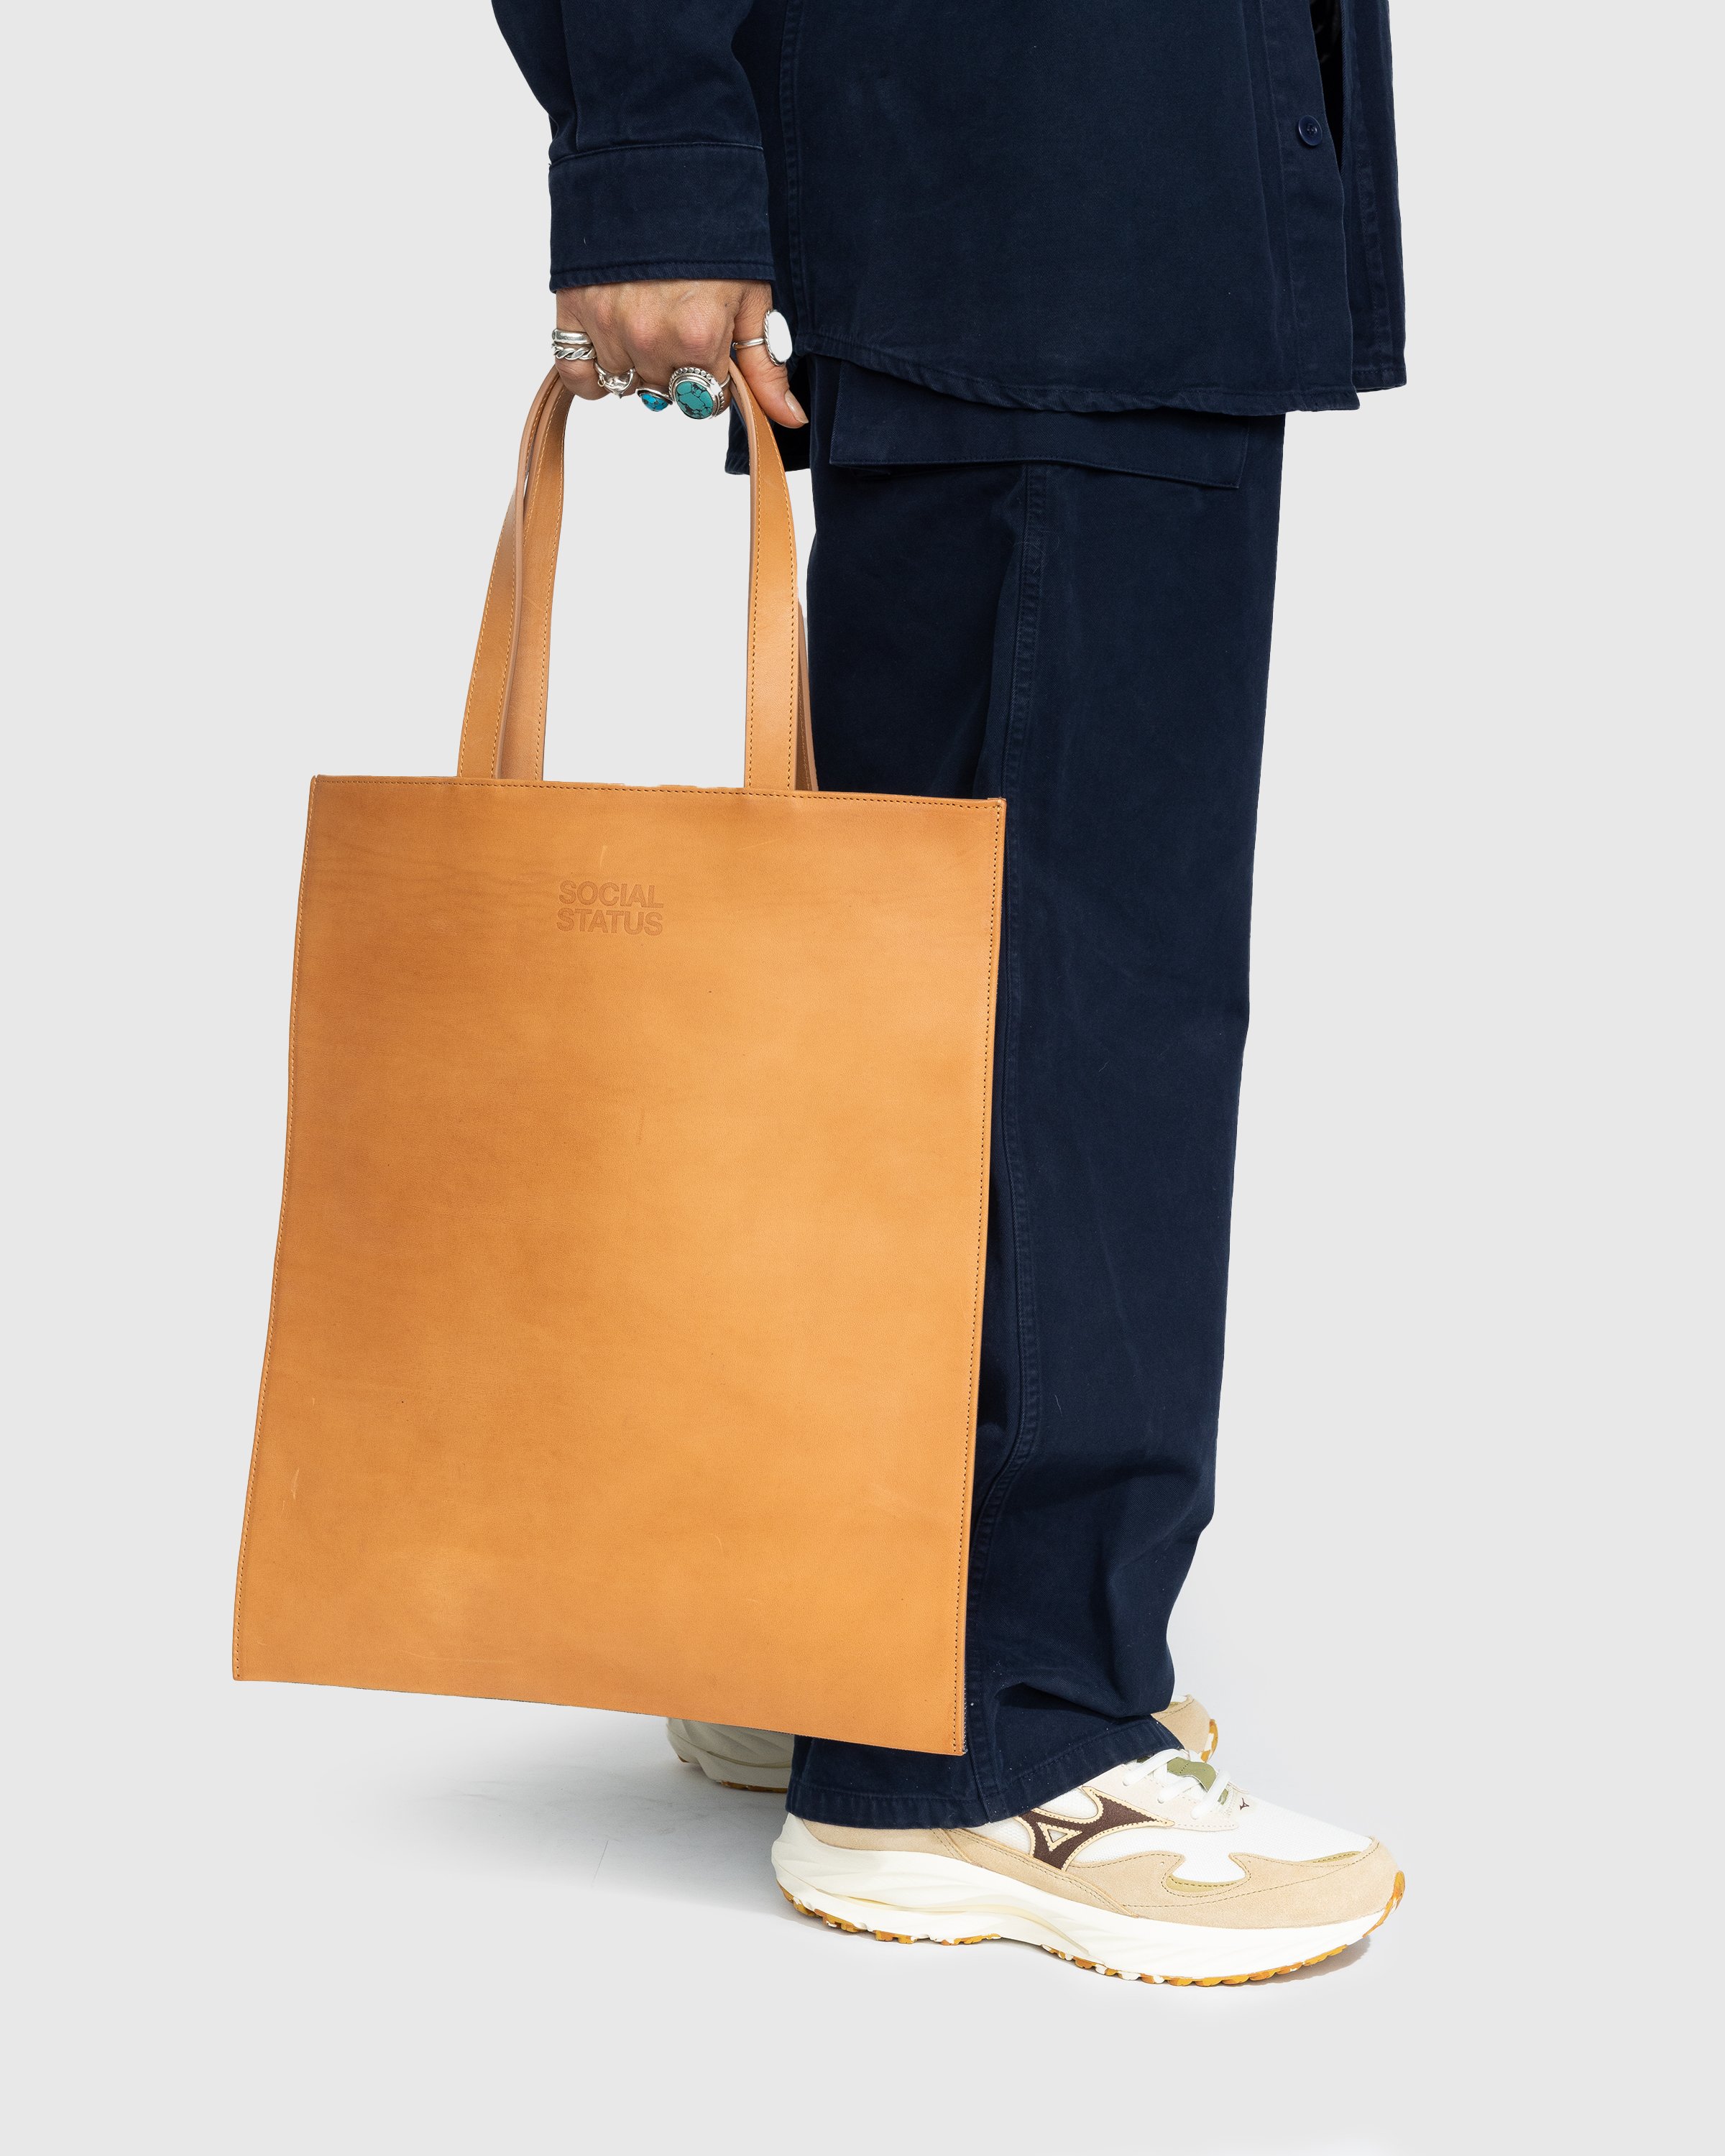 A.P.C. x Jean Touitou - Social Status Shopping Bag Orange - Accessories - Orange - Image 5